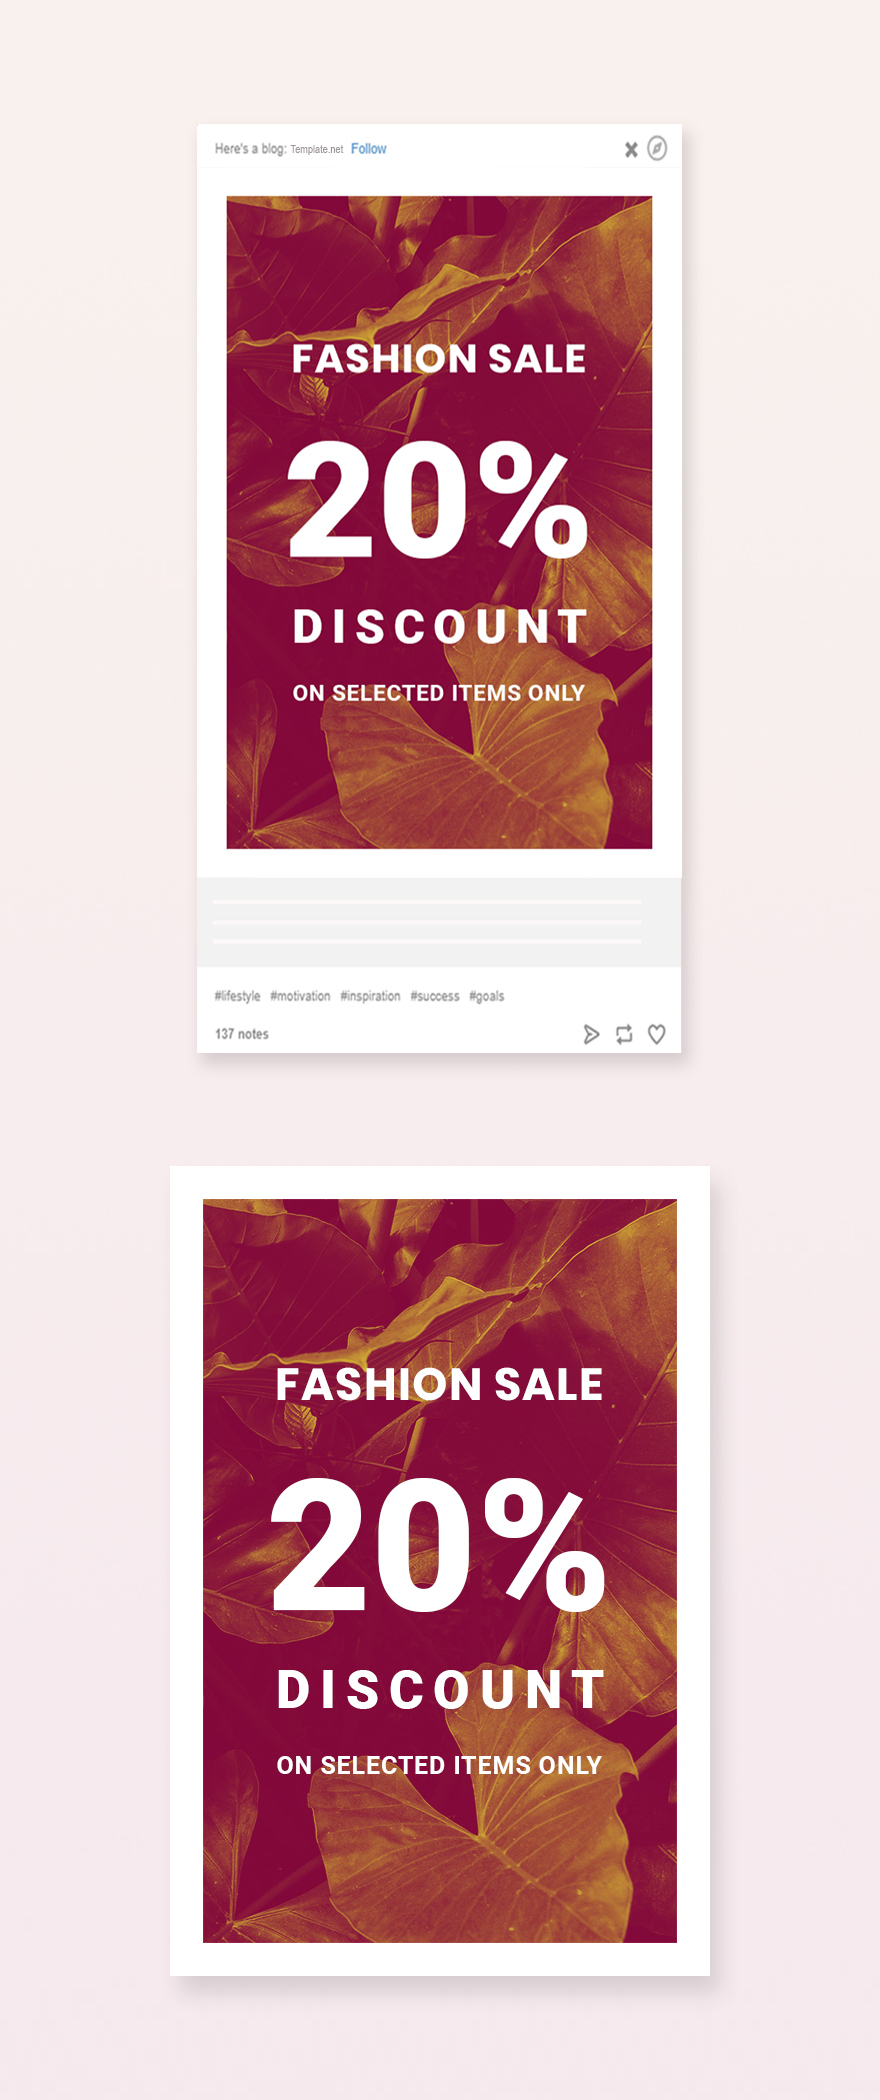 Editable Fashion Sale Tumblr Post Template PSD Template net